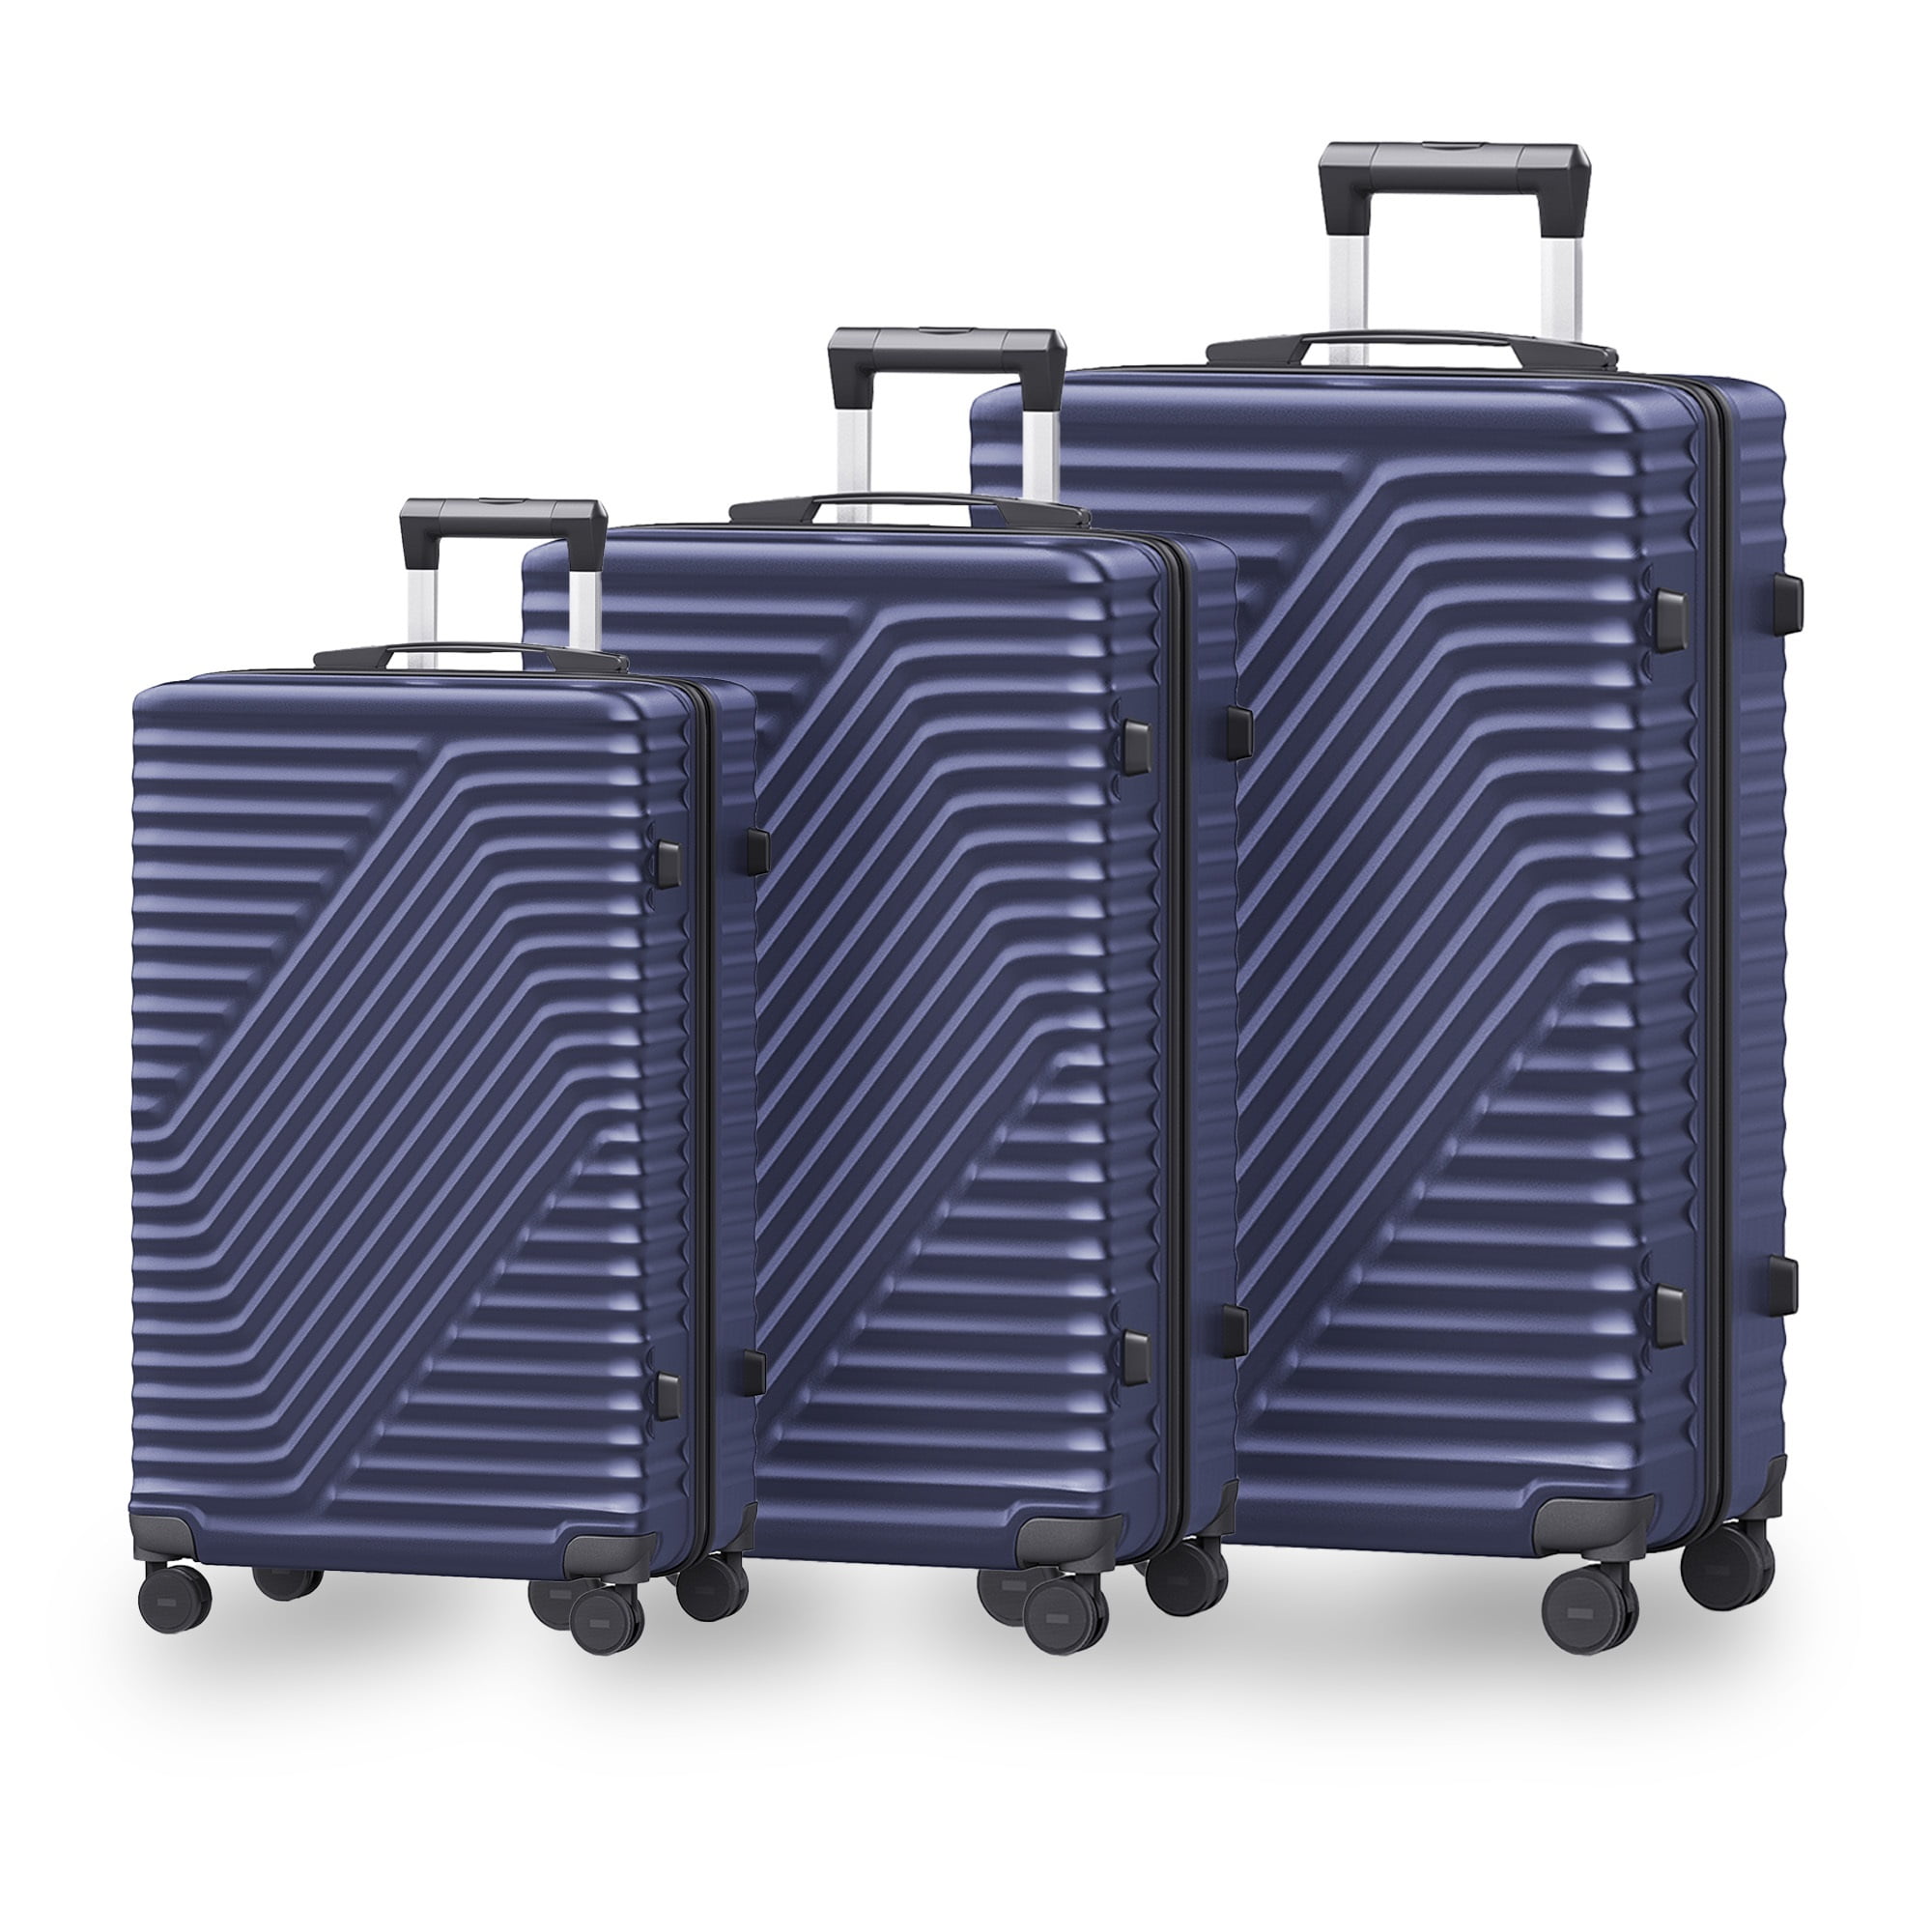 SUGIFT 3 Piece Suitcase Luggage Set with TSA Lock, Dark Blue - Walmart.com